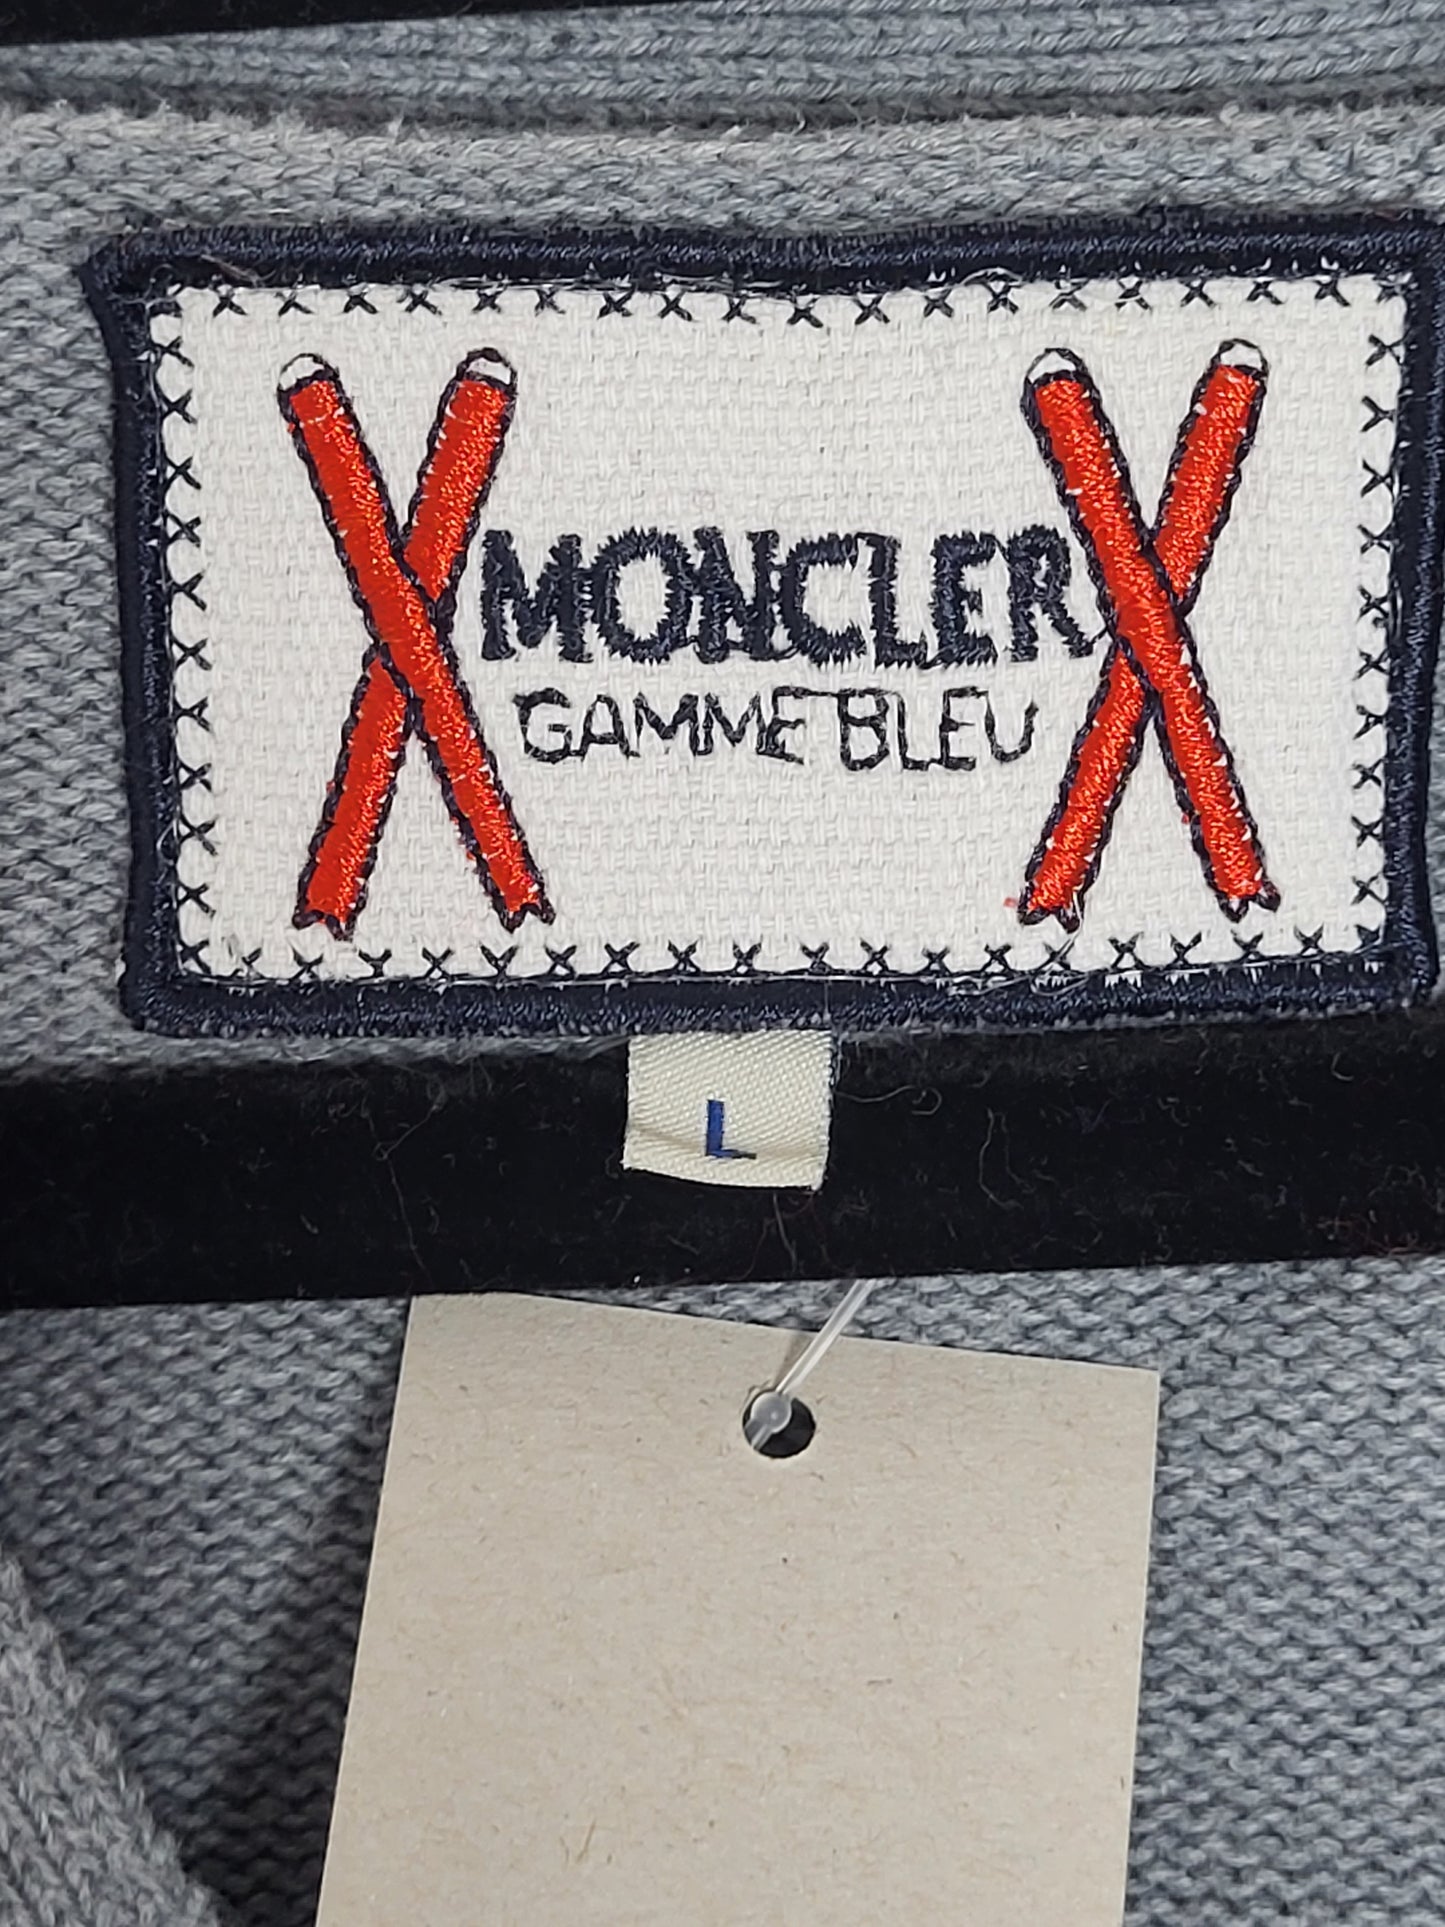 MONCLER - Vintage Cardigan / Pullover - Klassisch - Grau - Herren - M/L